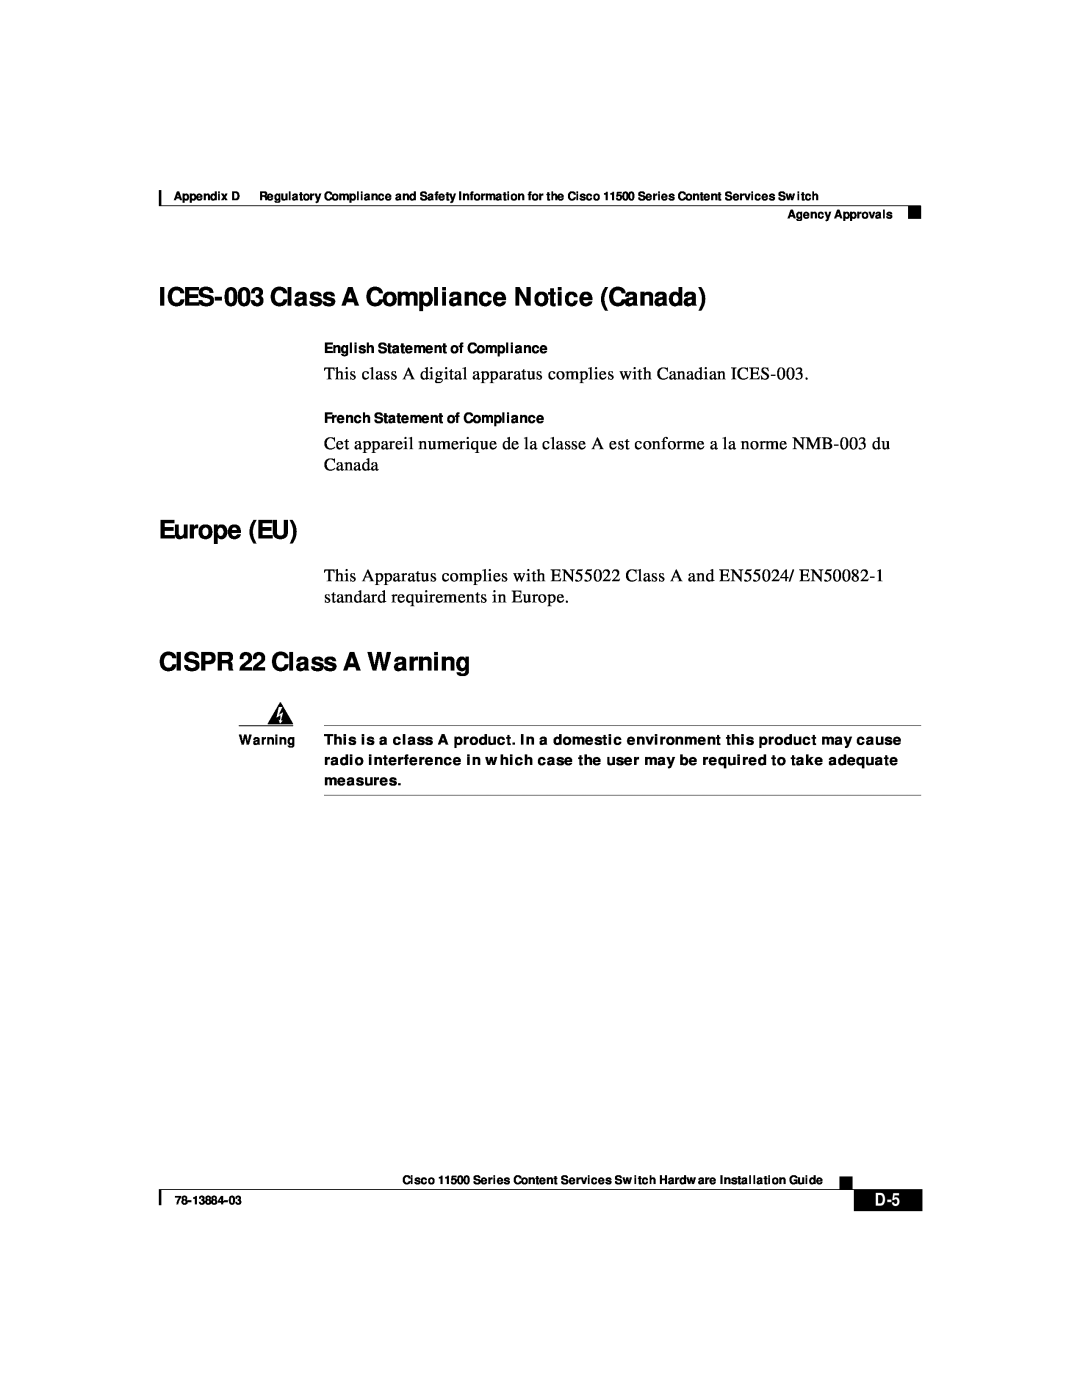 Cisco Systems 11500 Series manual ICES-003 Class A Compliance Notice Canada, Europe EU, CISPR 22 Class A Warning 